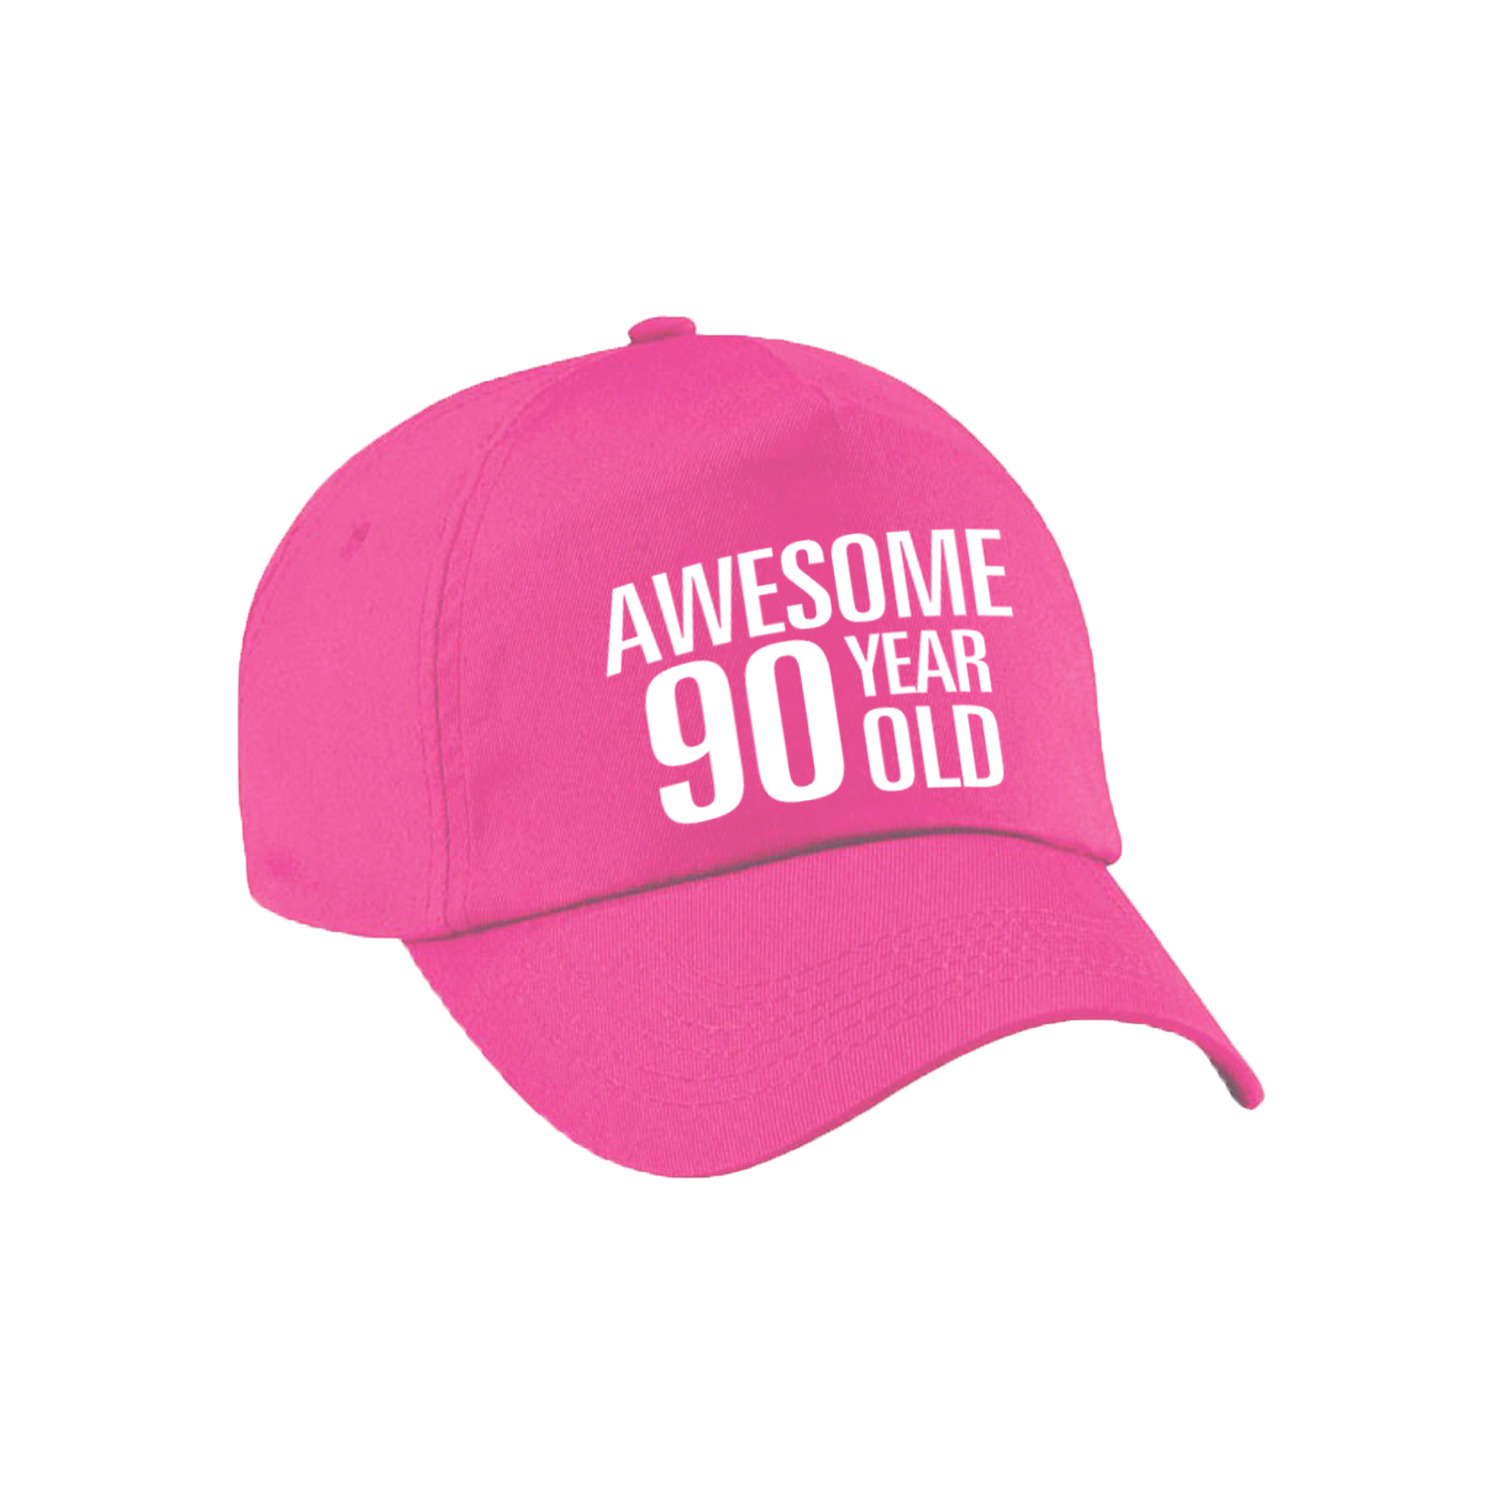 Awesome 90 year old verjaardag pet-cap roze voor dames